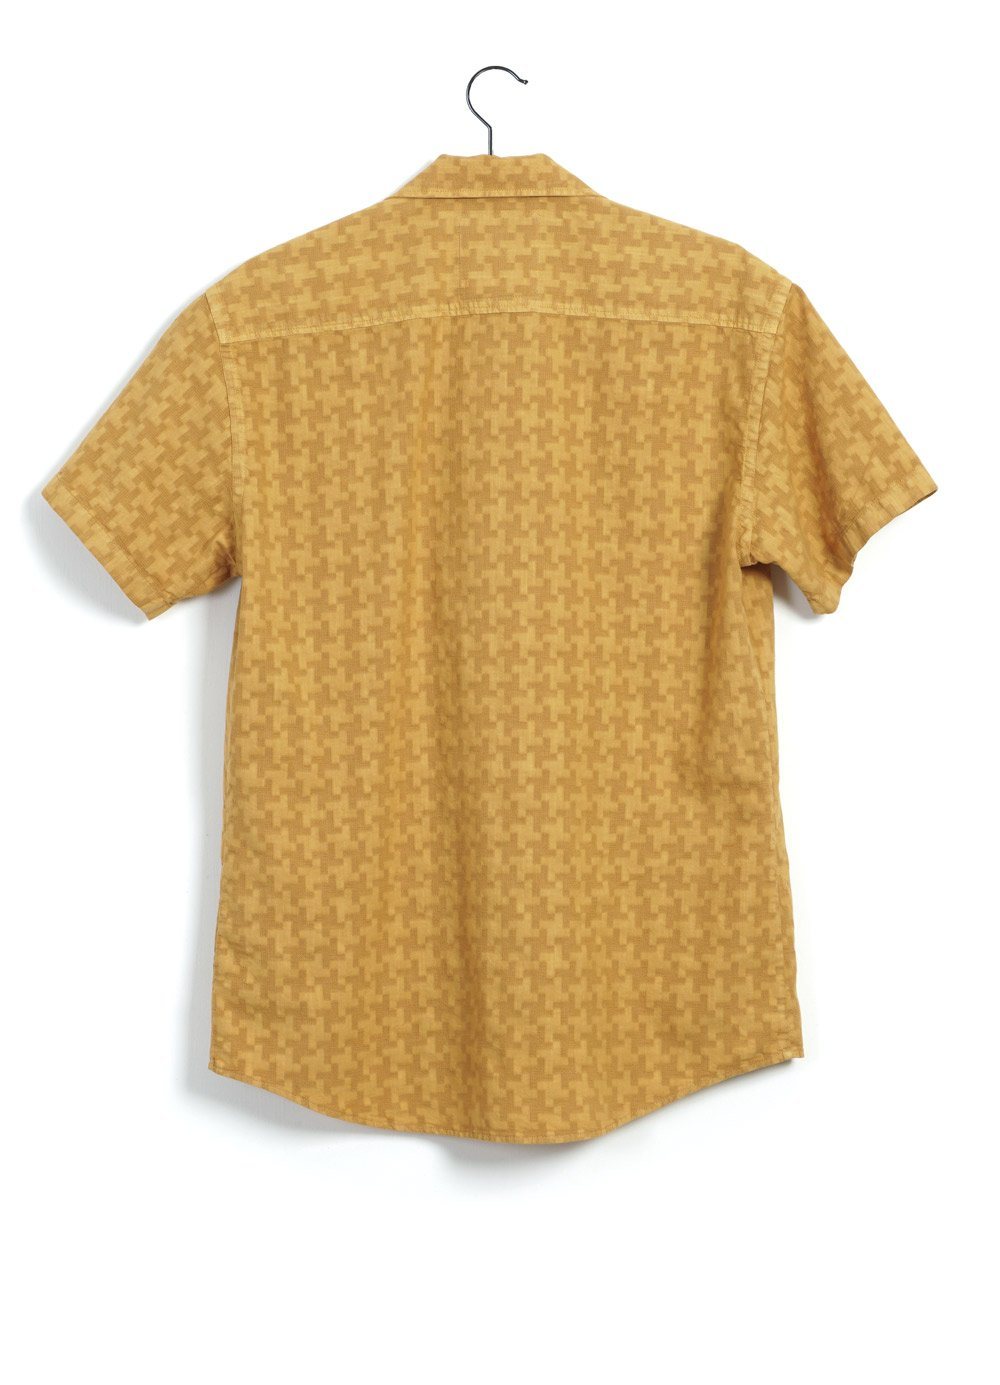 HANSEN GARMENTS - JONNY | Short Sleeve Shirt | Gold - HANSEN Garments